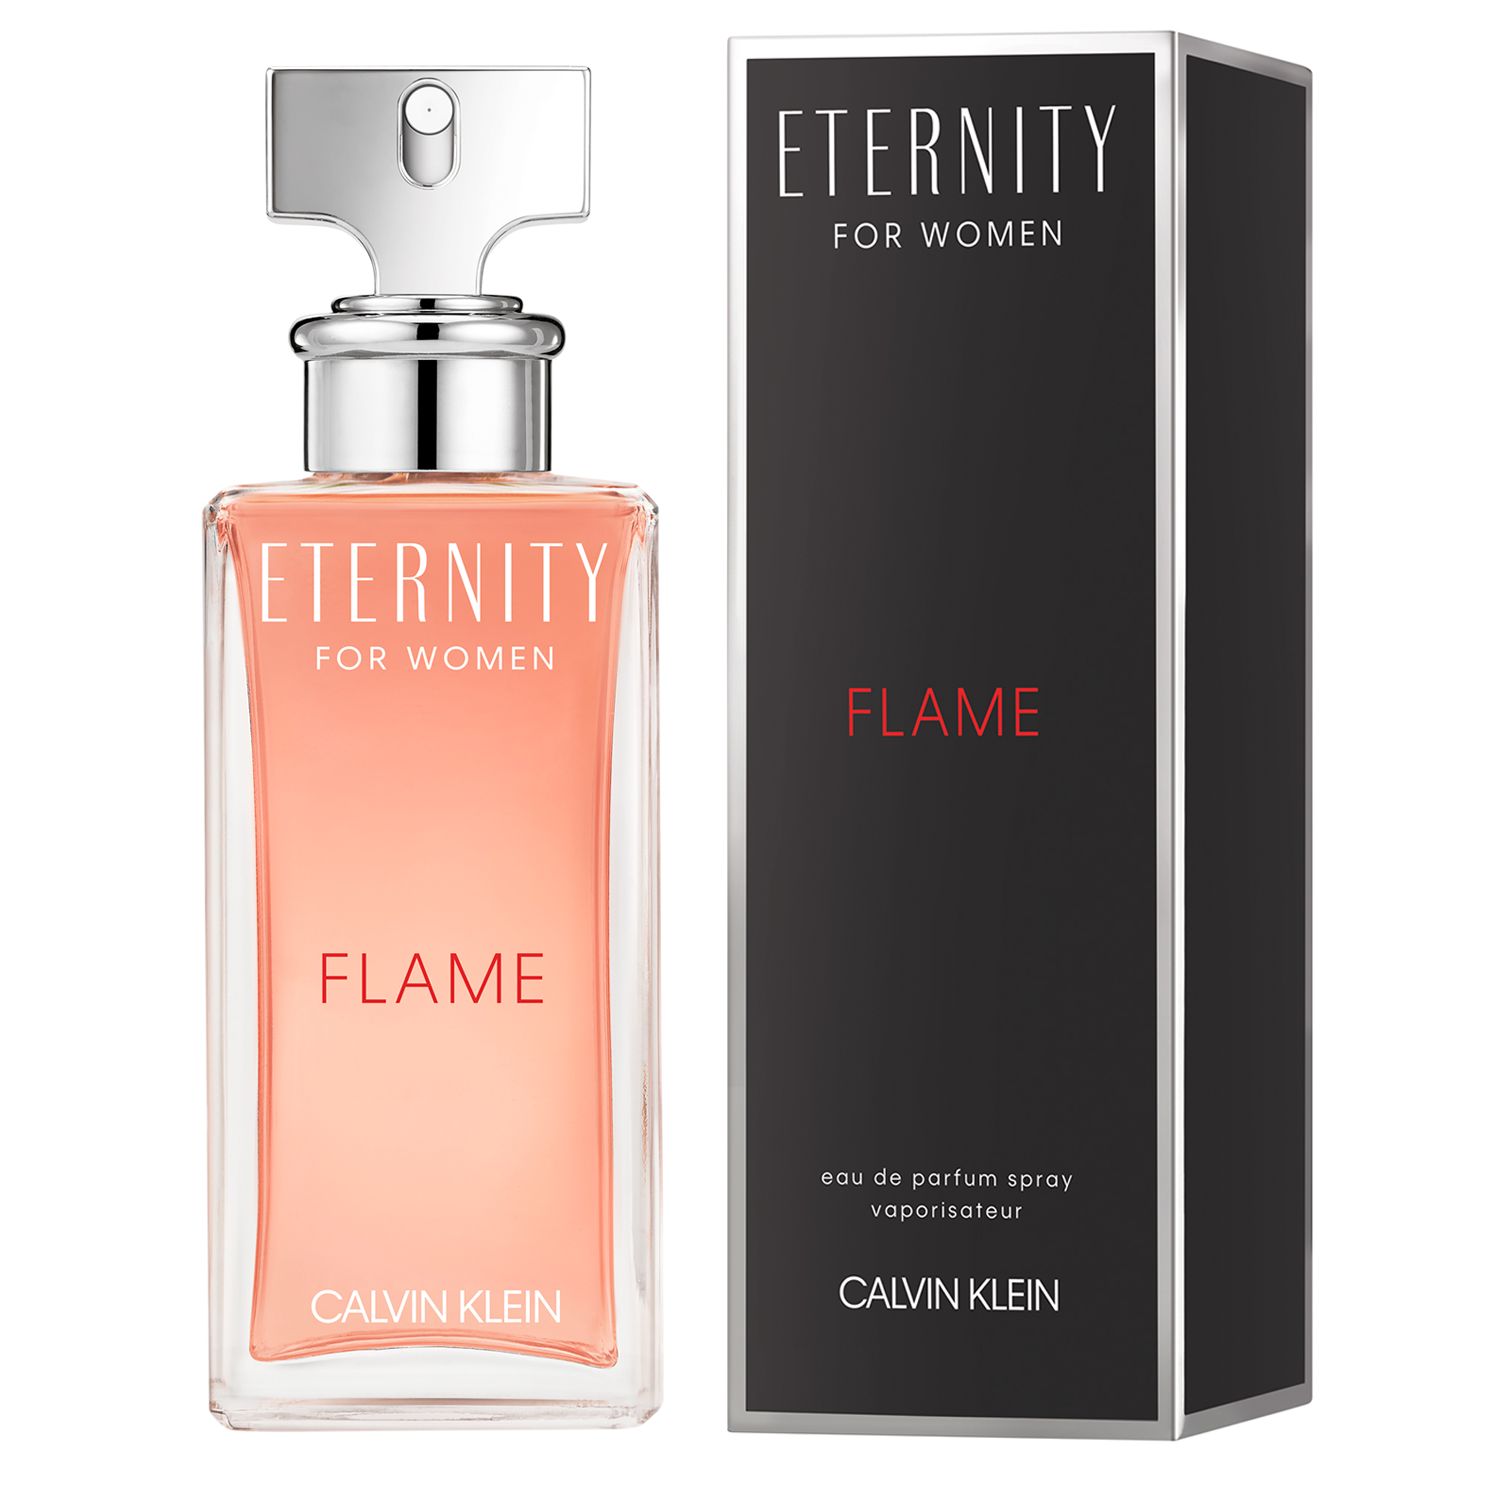 Calvin Klein Eternity Flame Men's Cologne Shop, 56% OFF